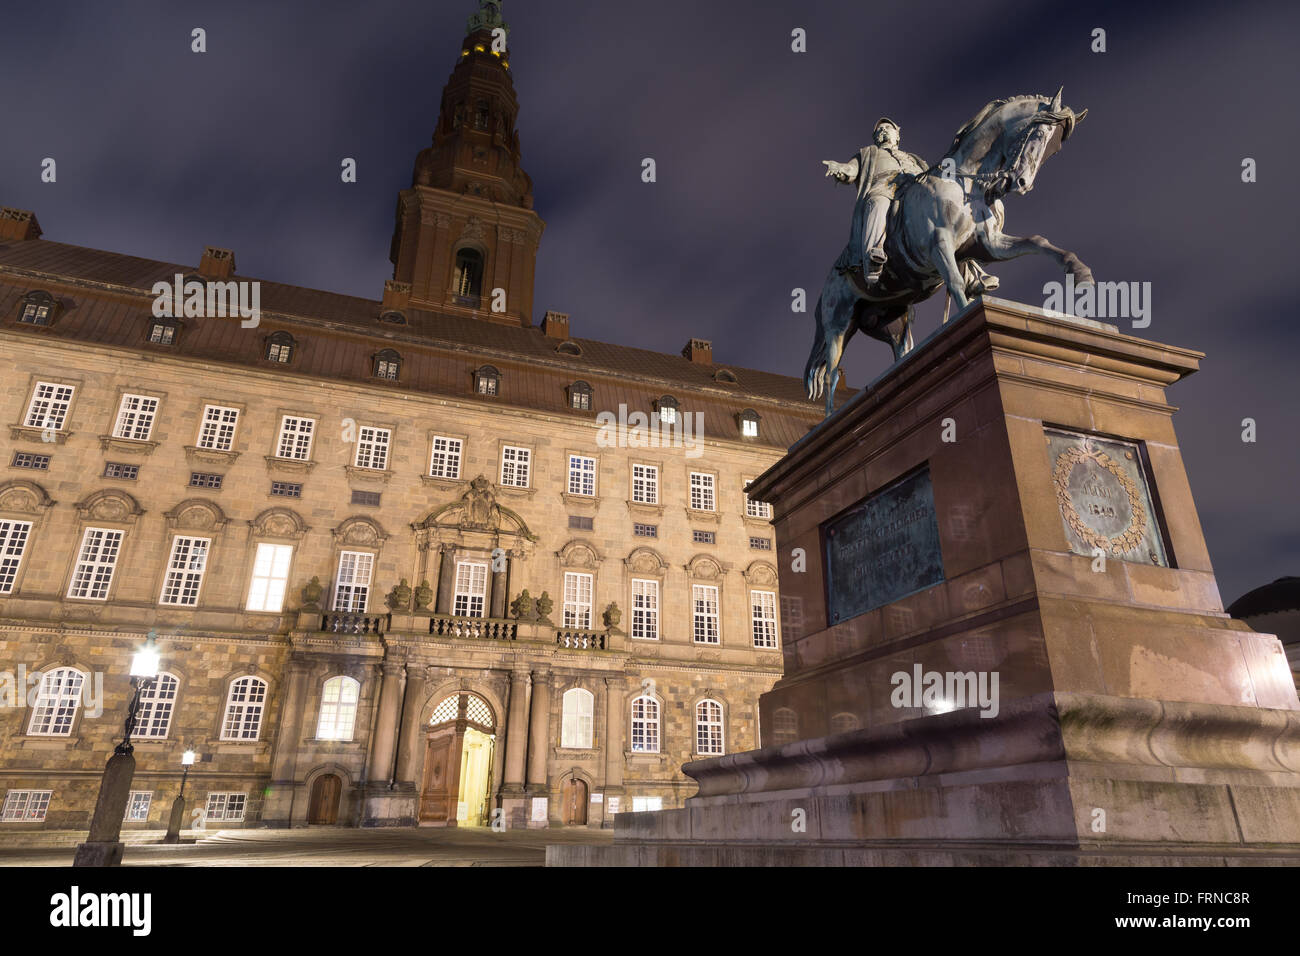 Copenhague, Dinamarca - 22 de marzo de 2016: la sede del parlamento danés Christiansborg Palace por la noche. Foto de stock